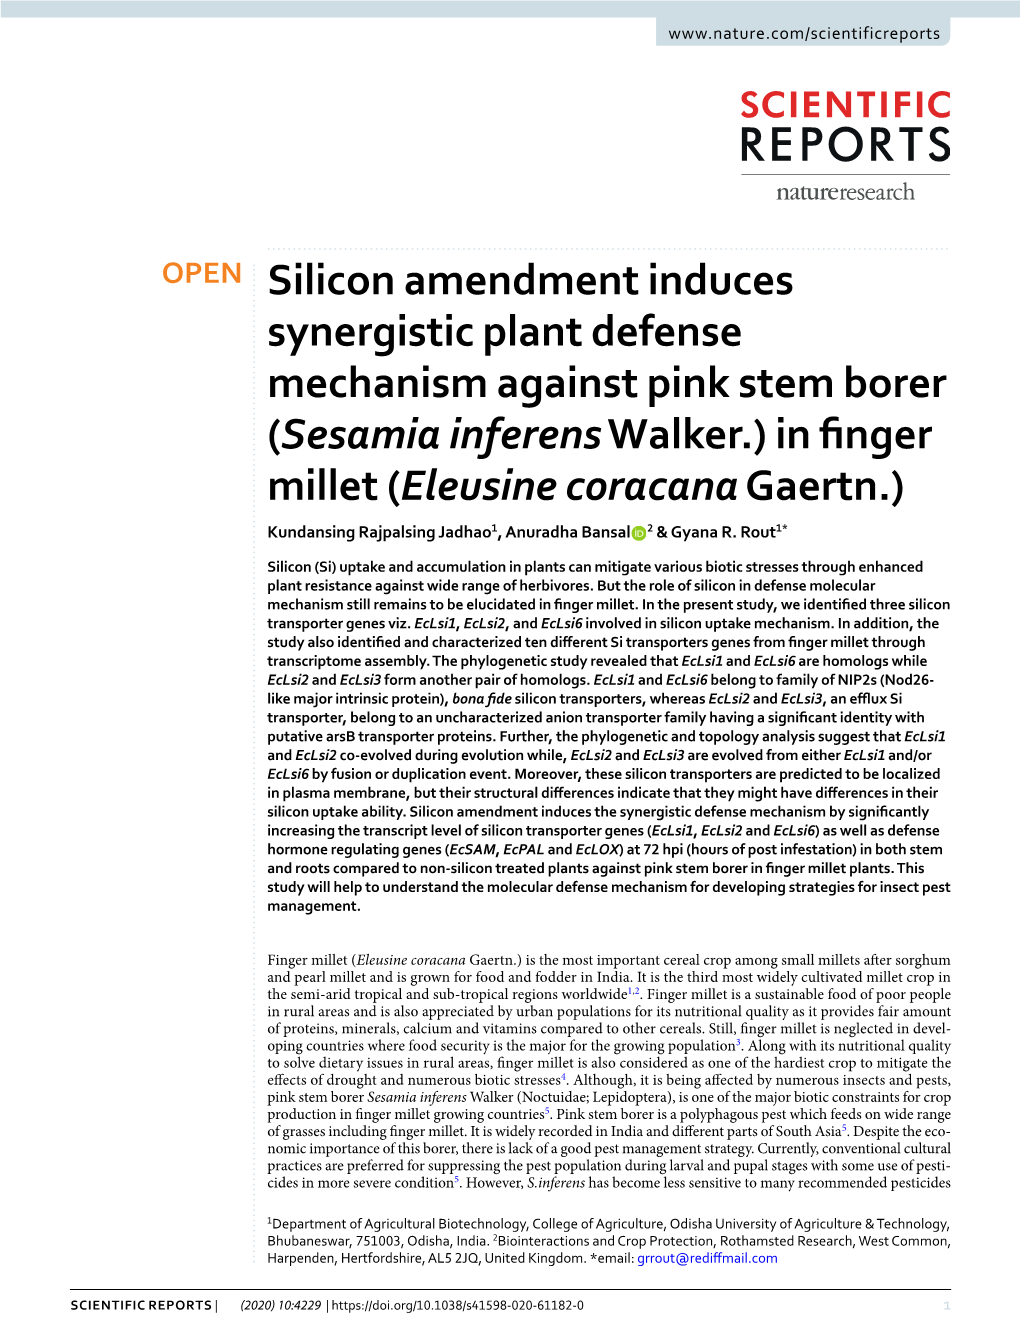 Silicon Amendment Induces Synergistic Plant Defense Mechanism Against Pink Stem Borer (Sesamia Inferens Walker.) in Finger Mille